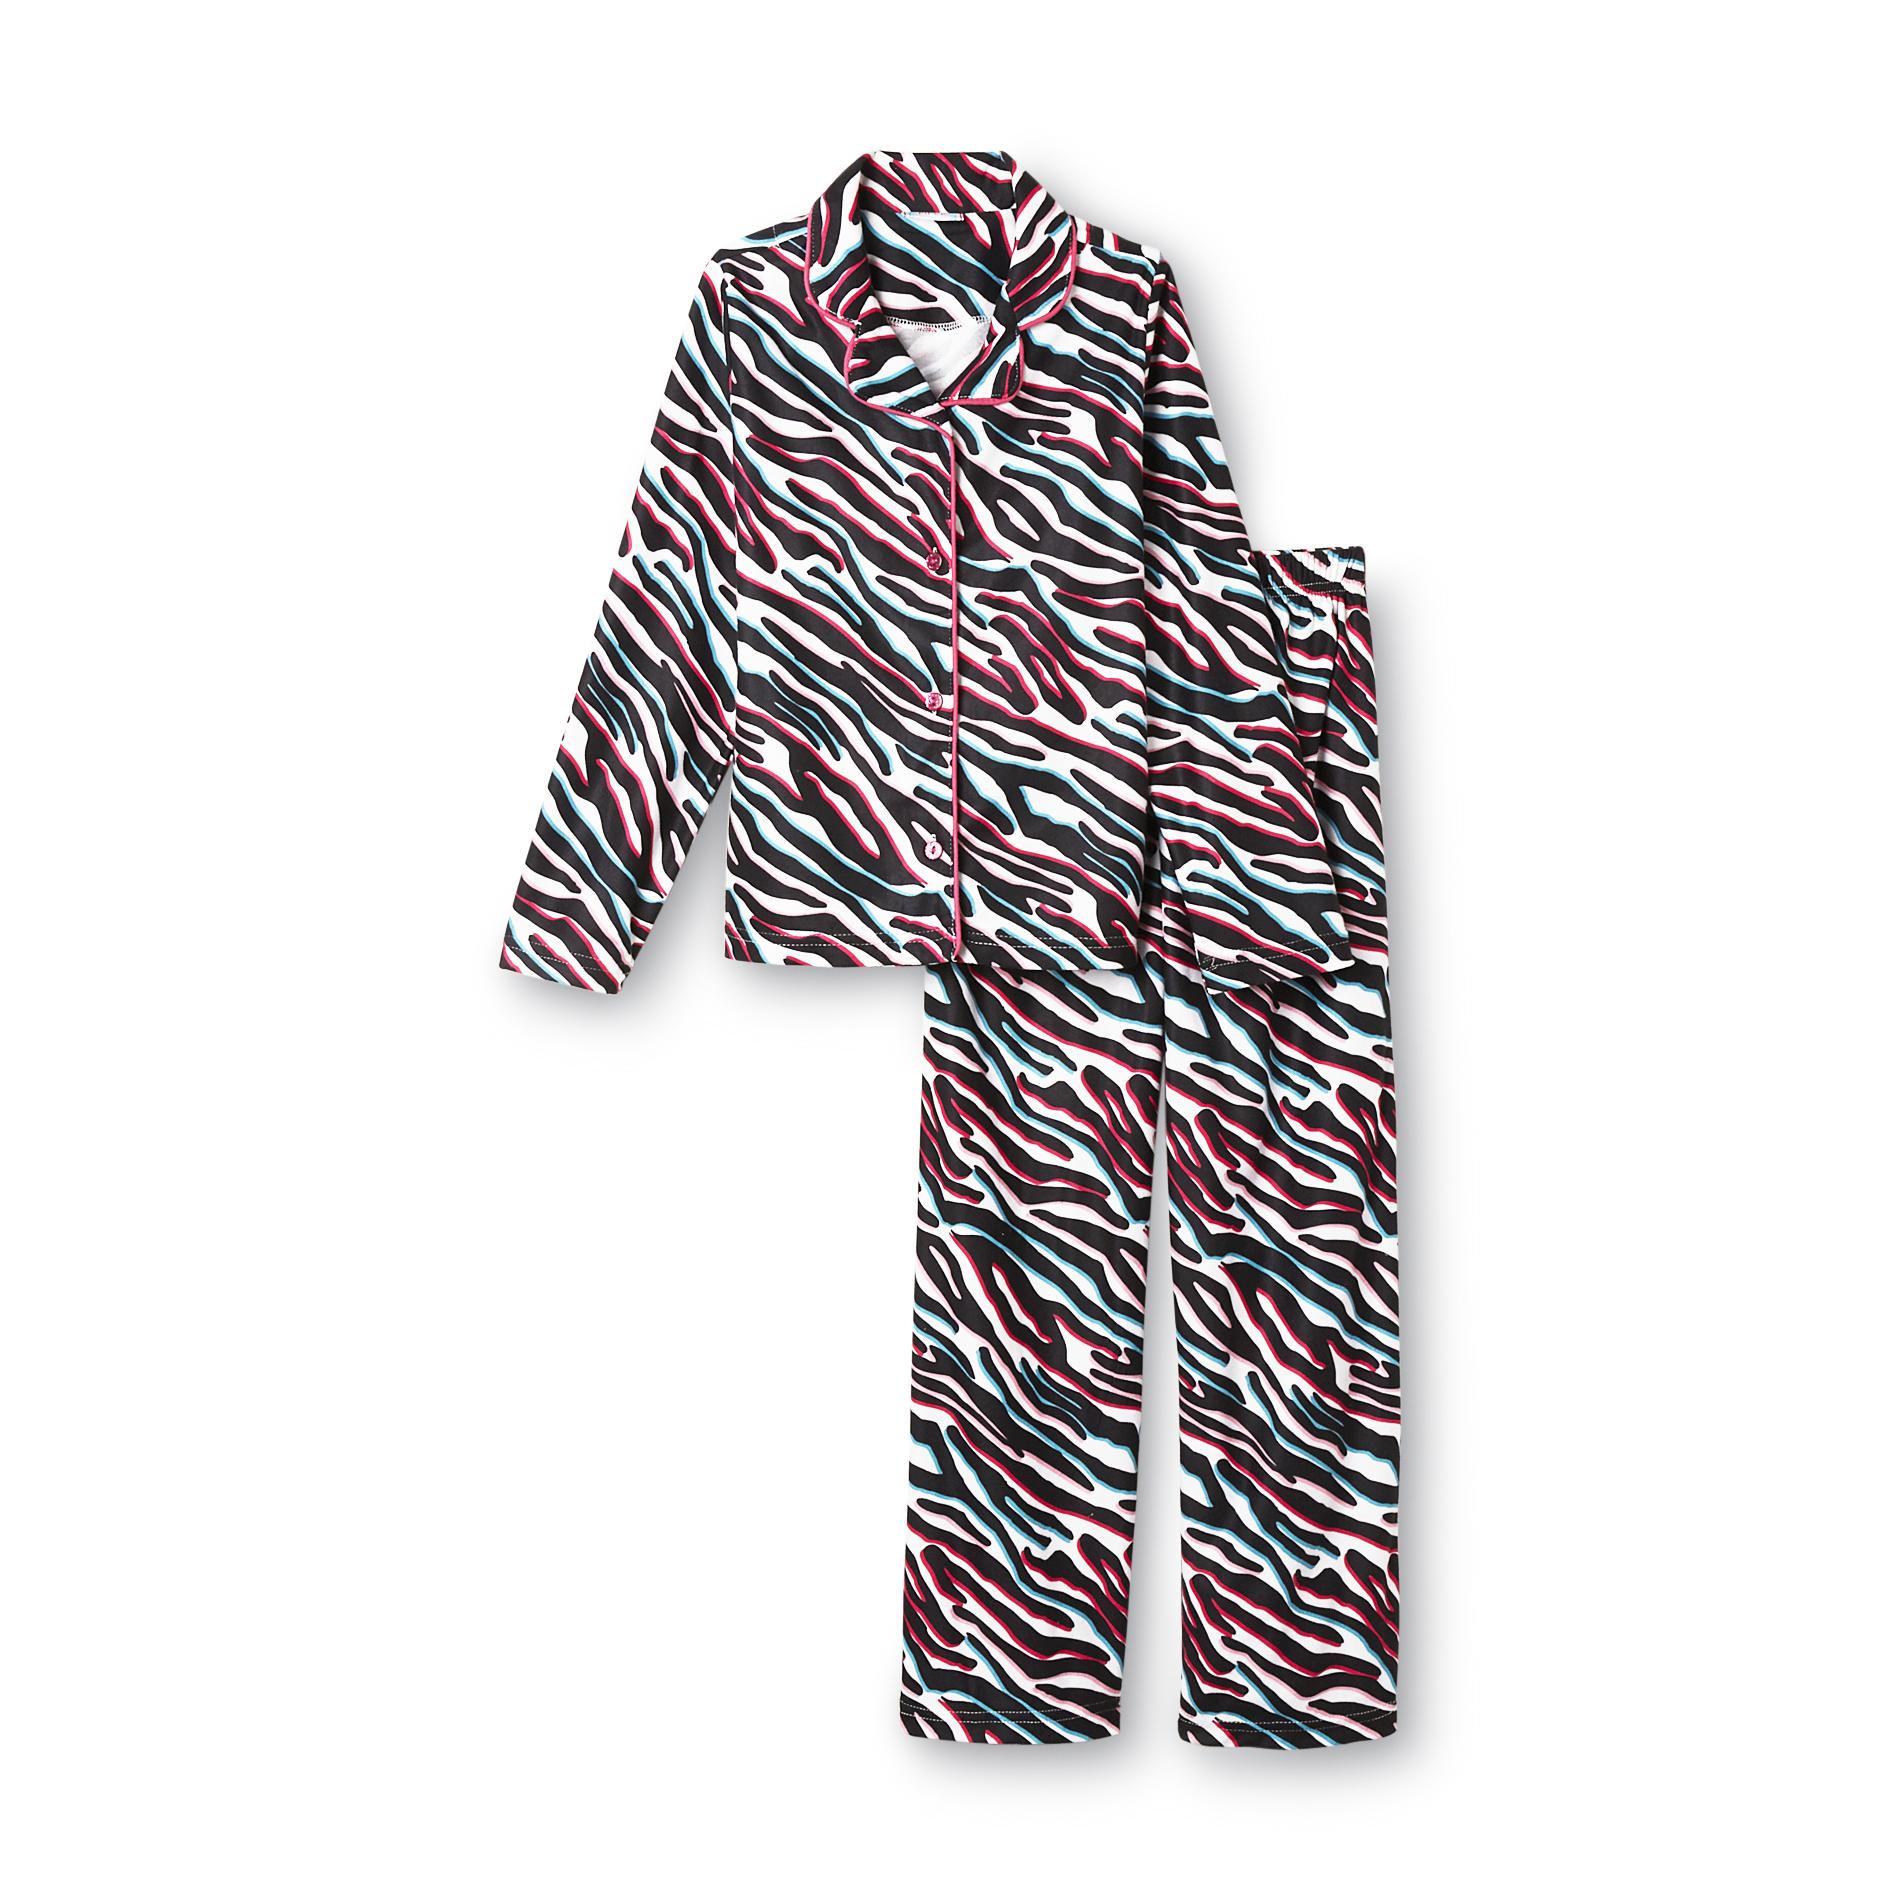 Piper Girl's Pajama Top & Pants - Zebra Print